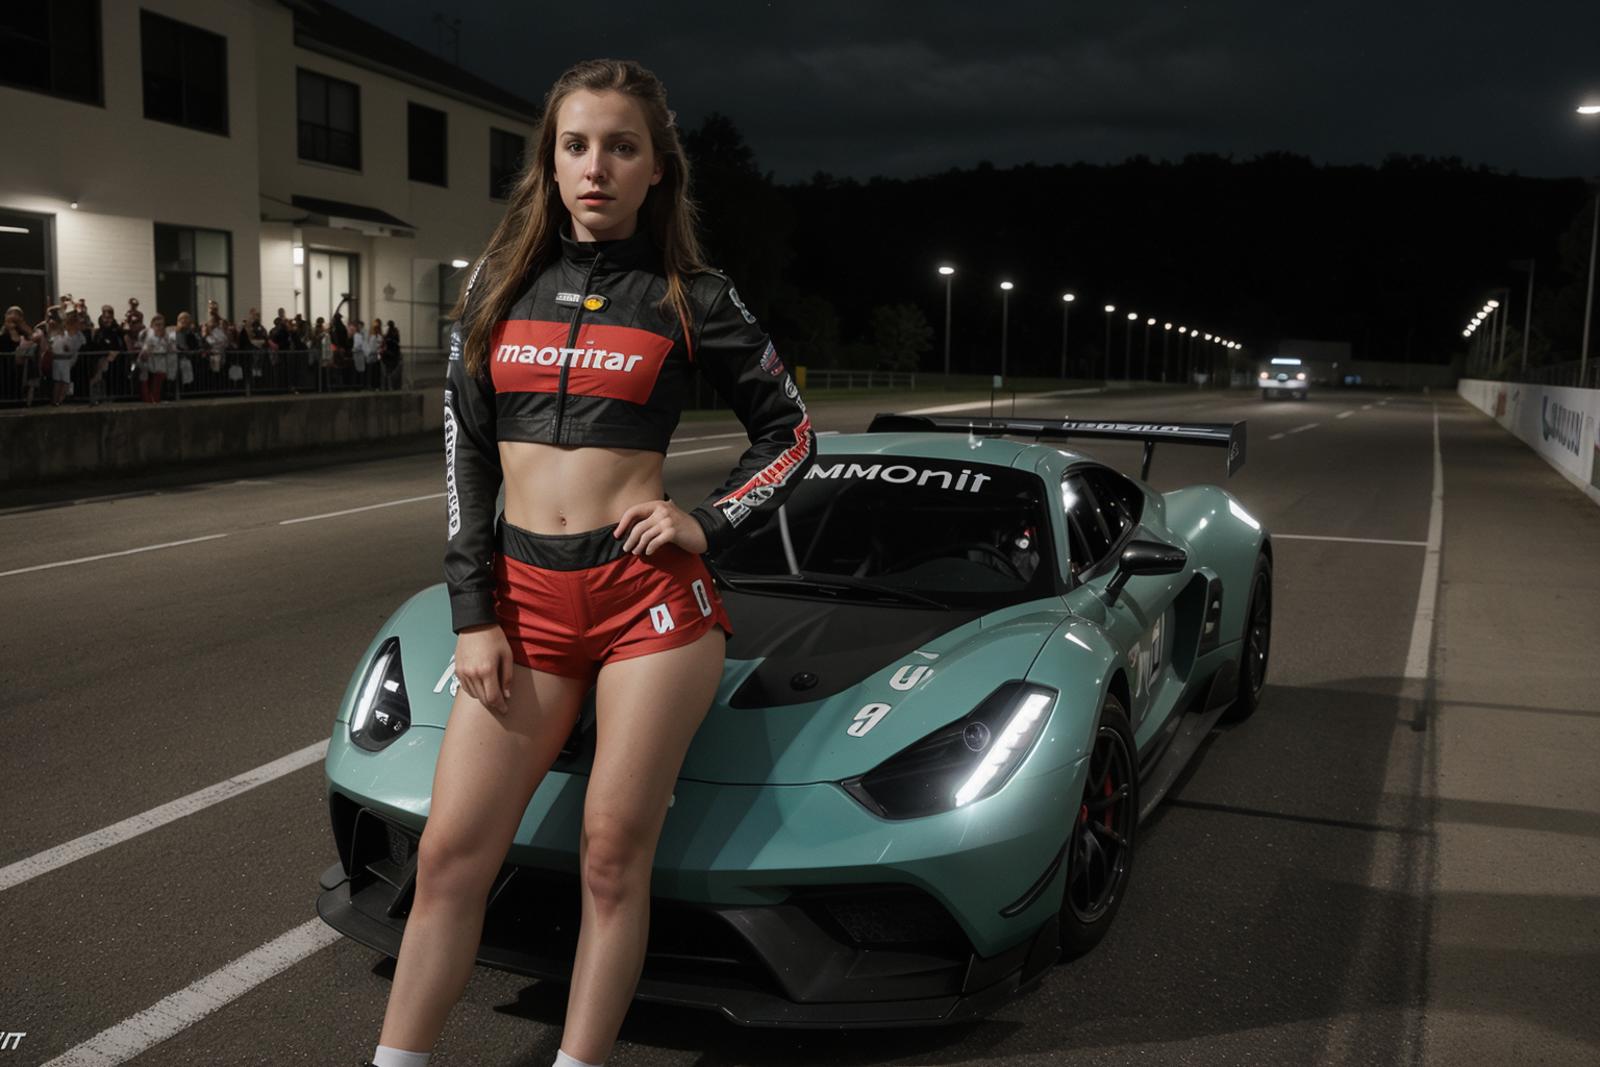 A woman posing next to a green sports car.